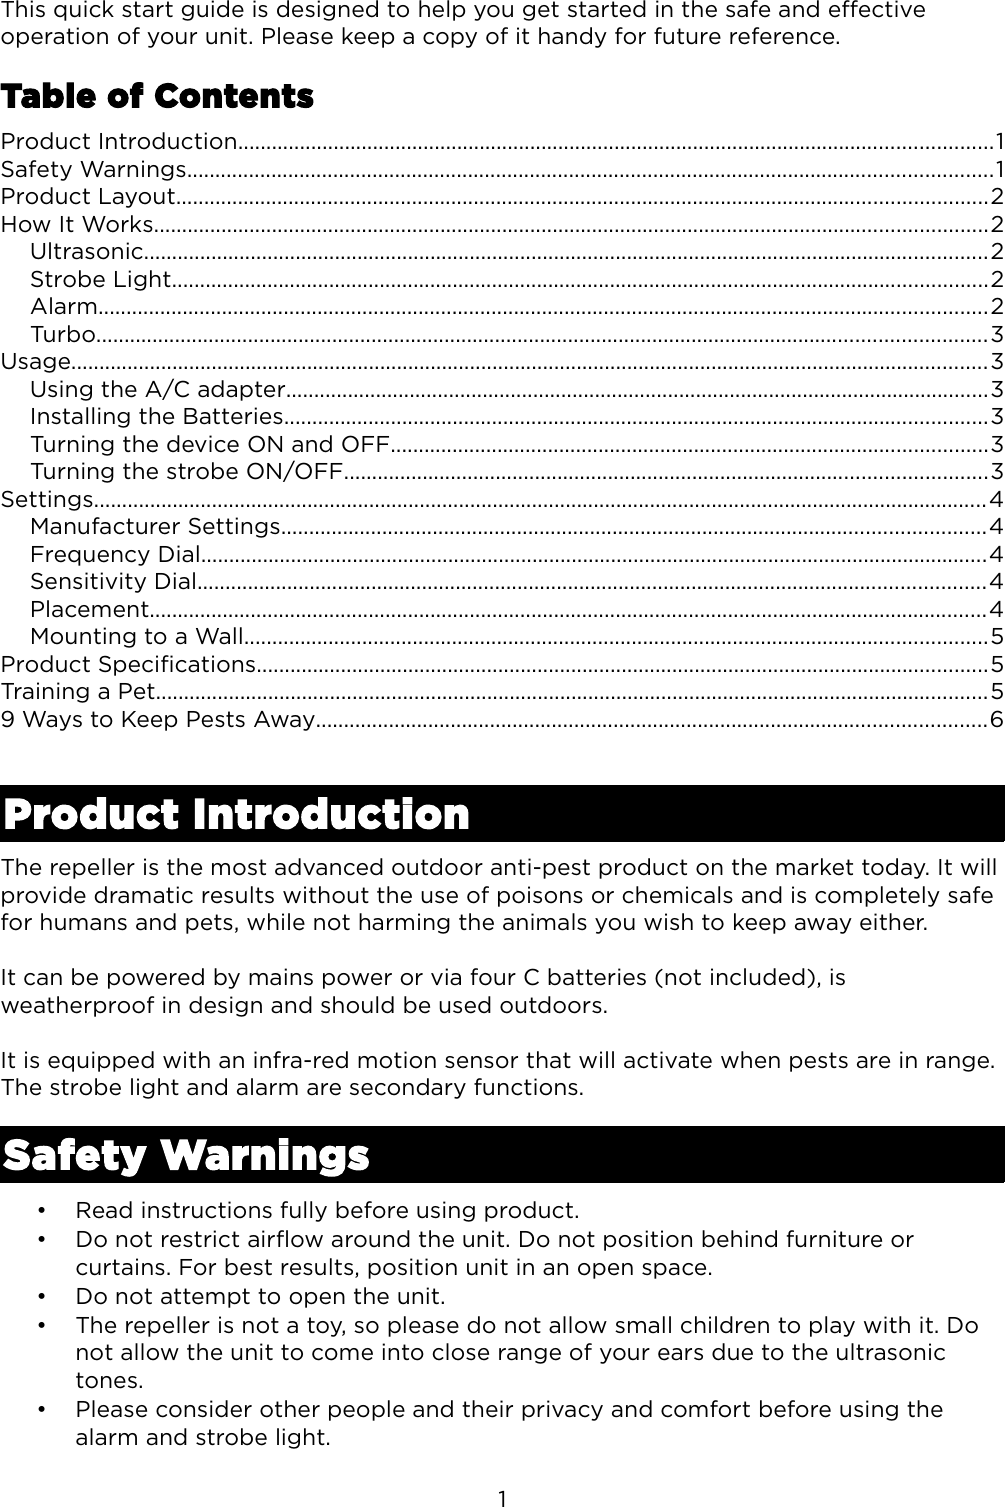 Page 2 of 7 - PTPSMREP1PA Pestill Possum Repeller User Manual  PTPSMREP1PA2-QSG